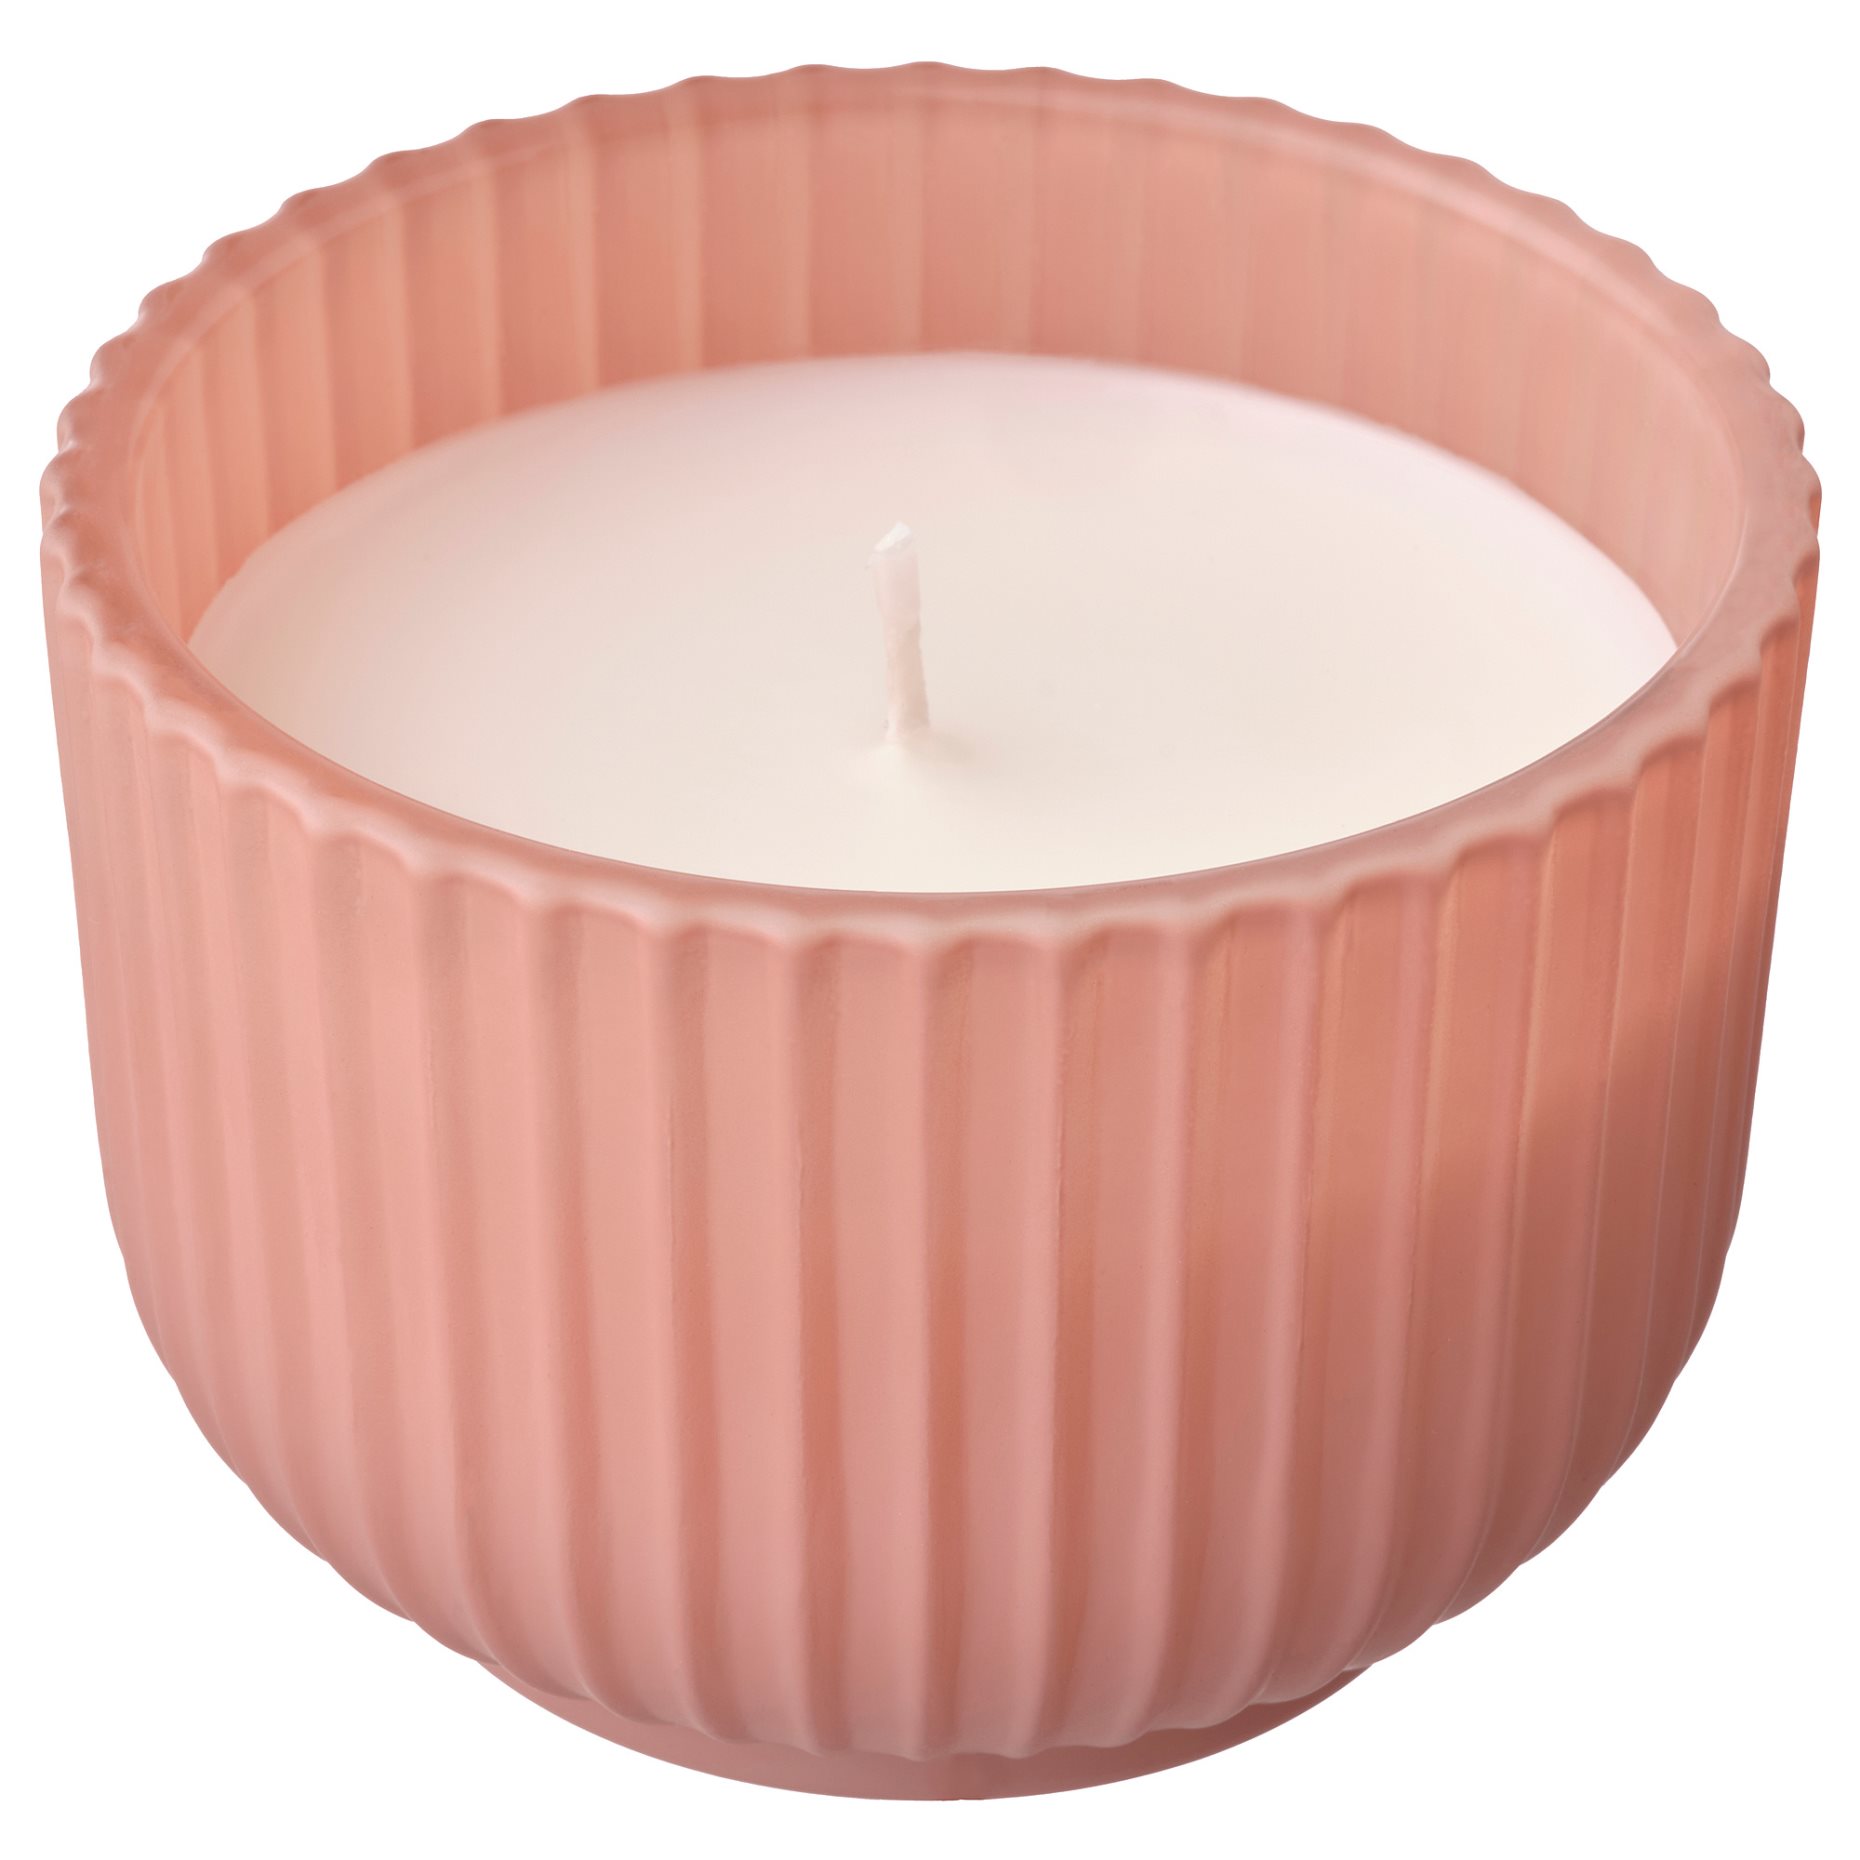 SOCKERLÖNN, scented candle in glass/Peach & blossom, 20 hr, 905.381.57